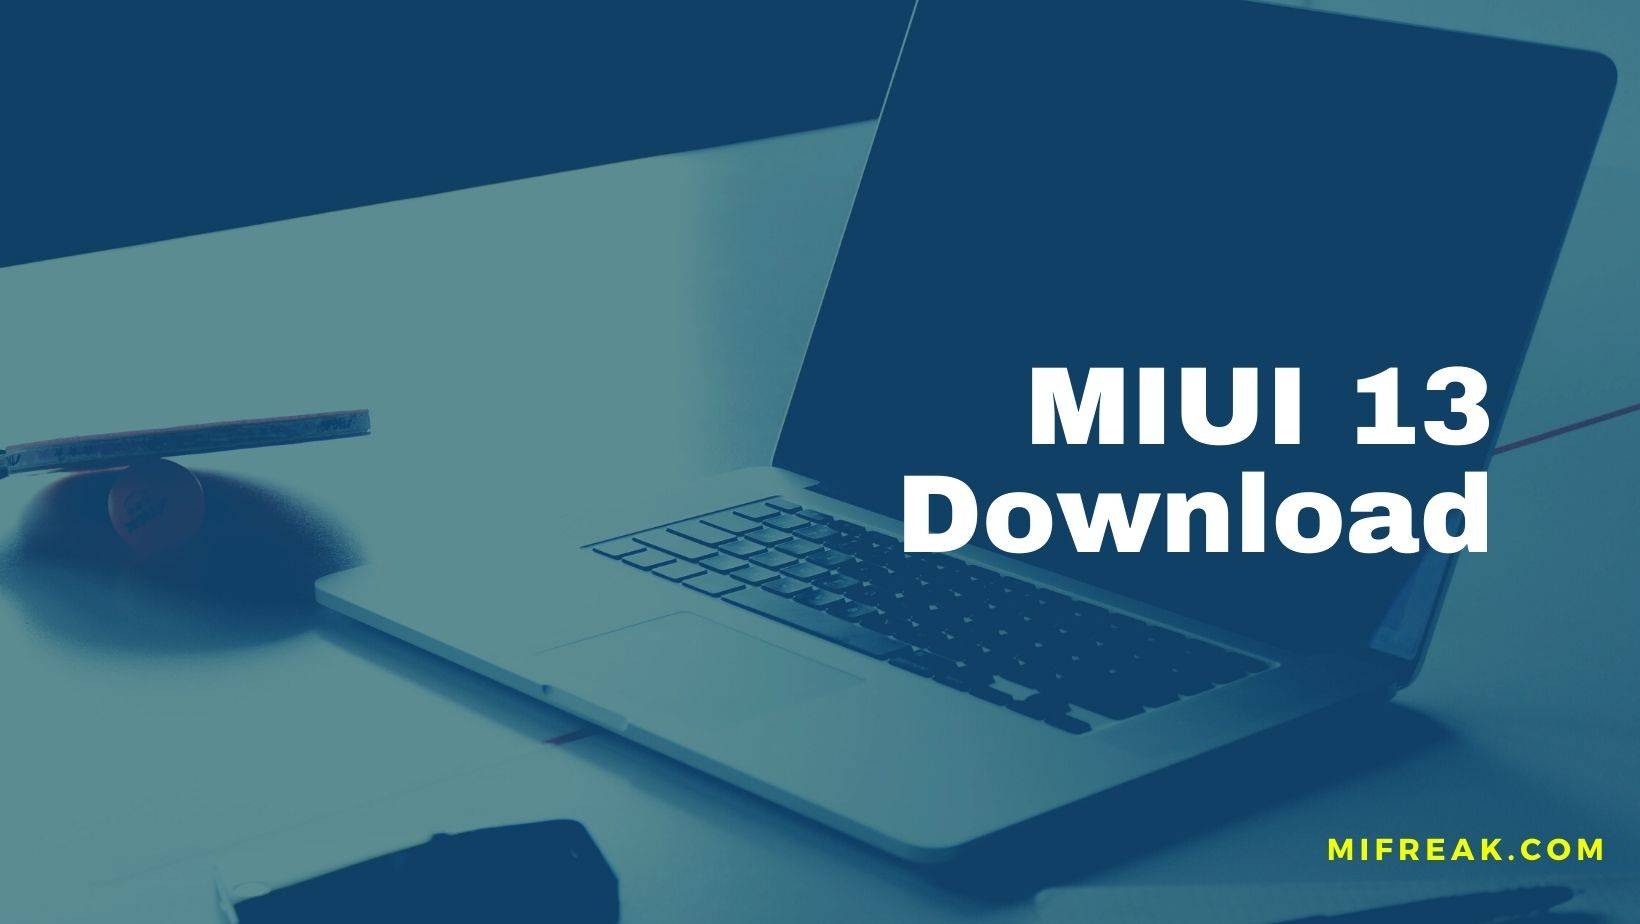 MIUI 13 Download